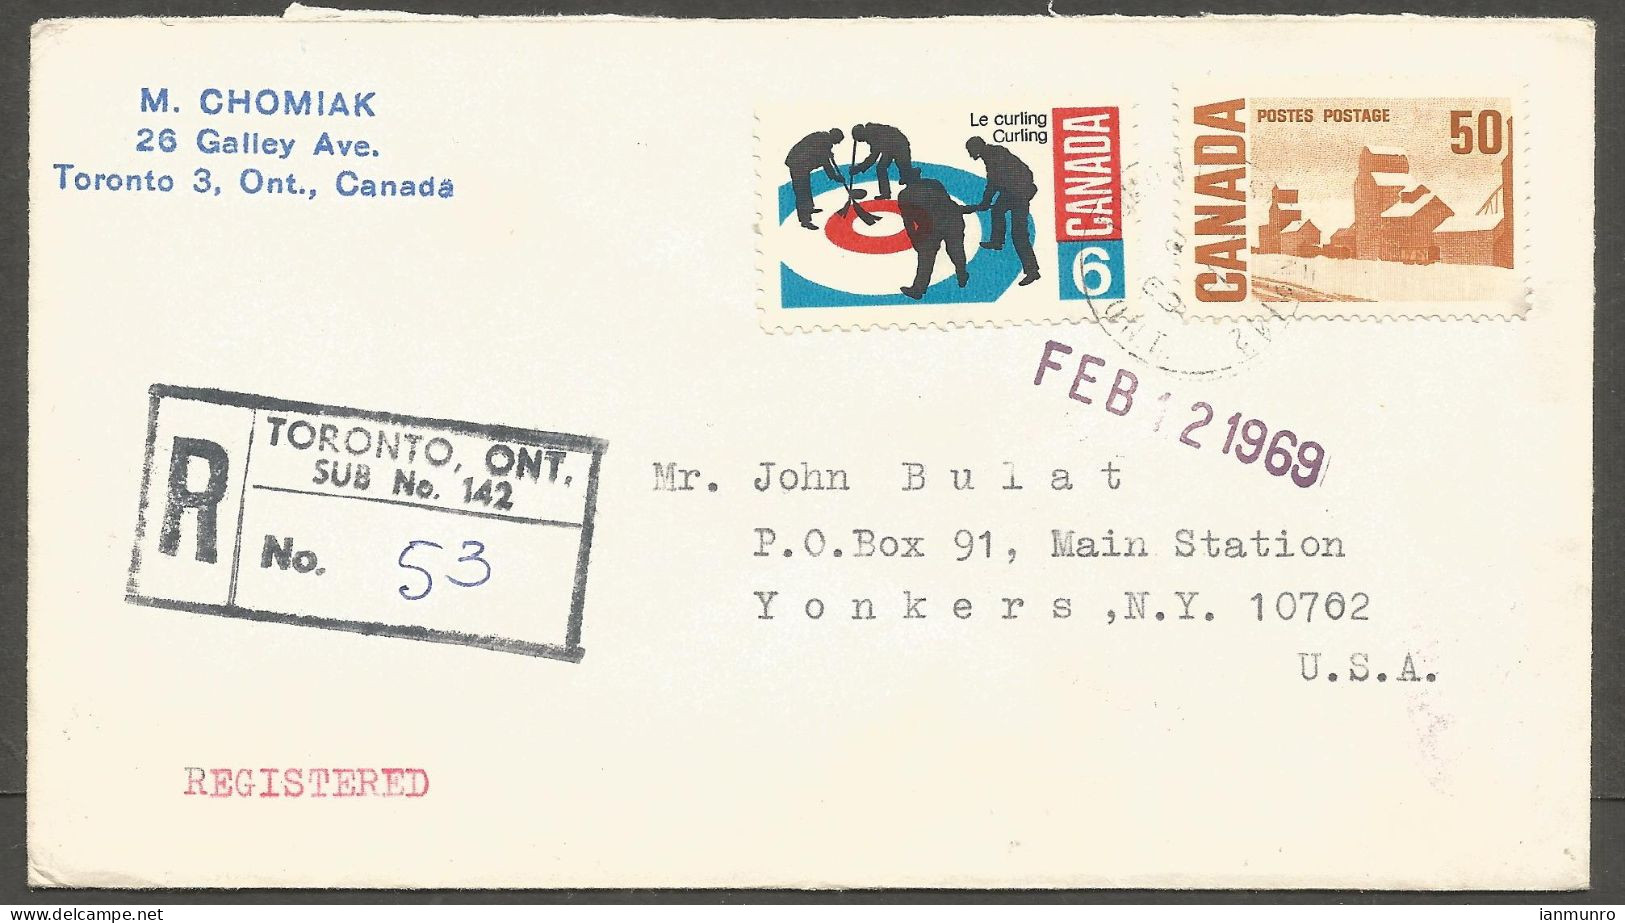 1969 Registered Cover 56c Centennial/Curling CDS Toronto Sub No 142 Ontario - Histoire Postale